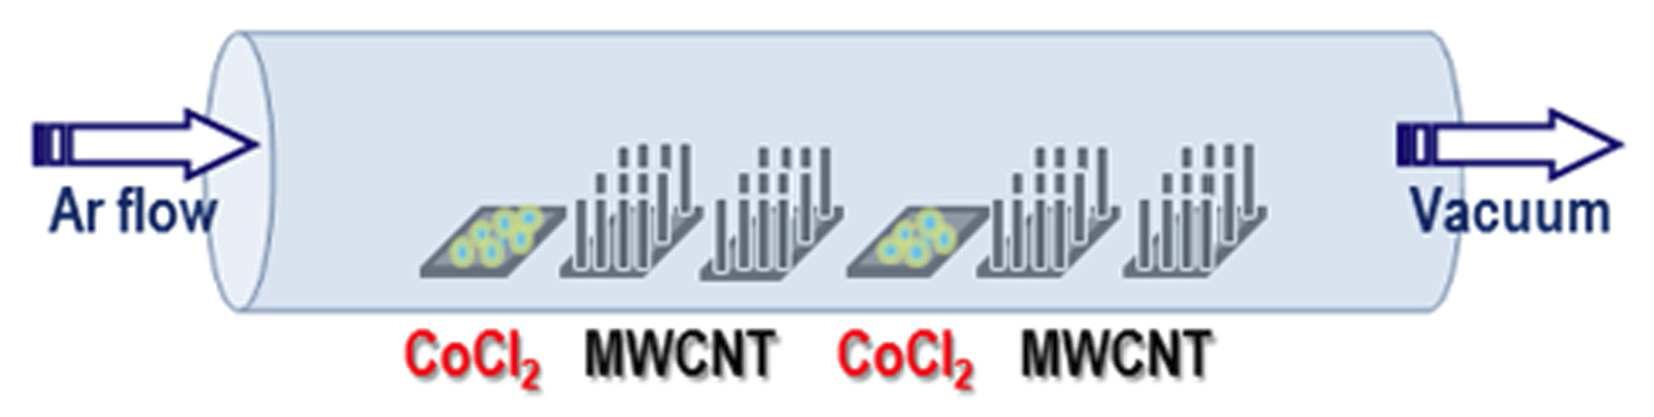 Thermal evaporation을 이용한 CNT/CoO 나노복합체 합성공정 모식도